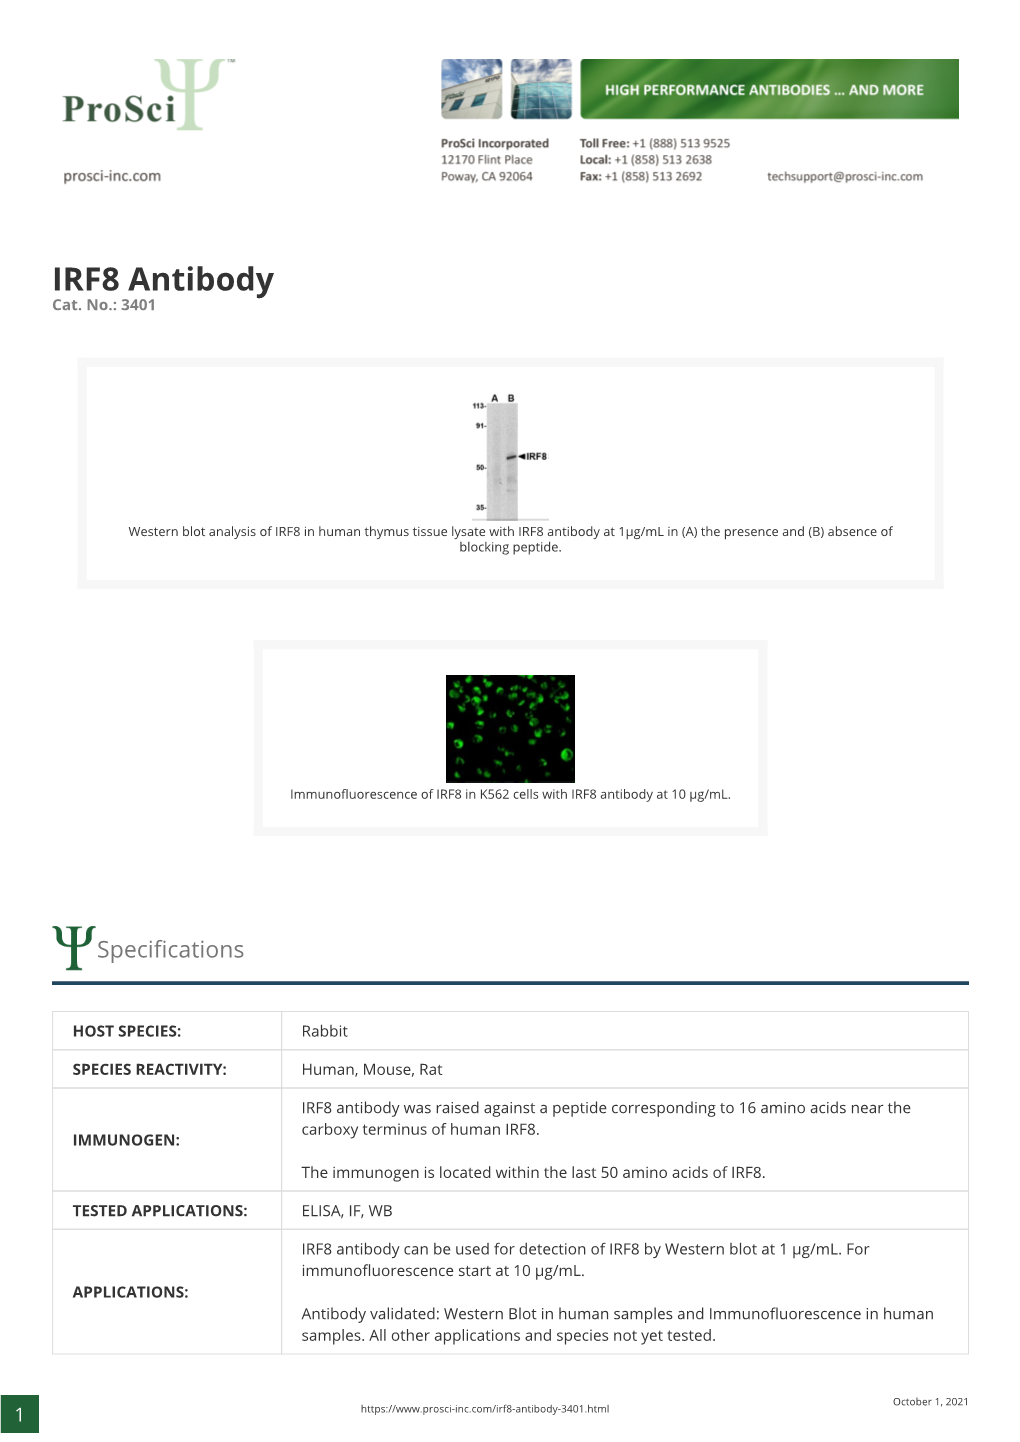 IRF8 Antibody Cat